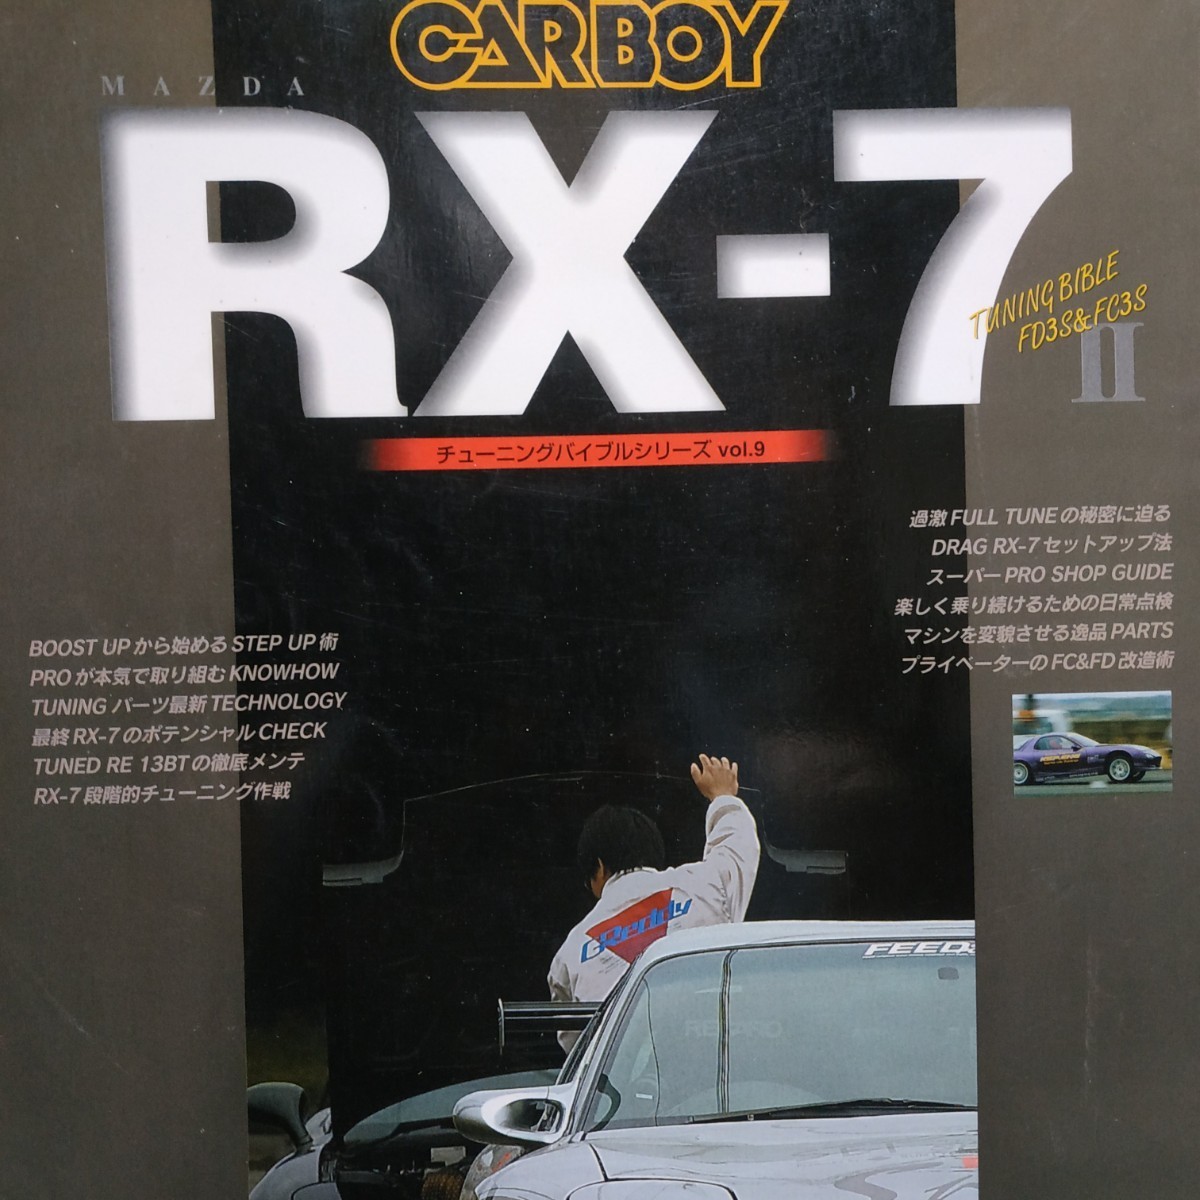 RX-7II チューニングバイブル9 FC3S FD3S ストリート シリーズ CARBOY 八重洲出版 tuning bible series 13BT